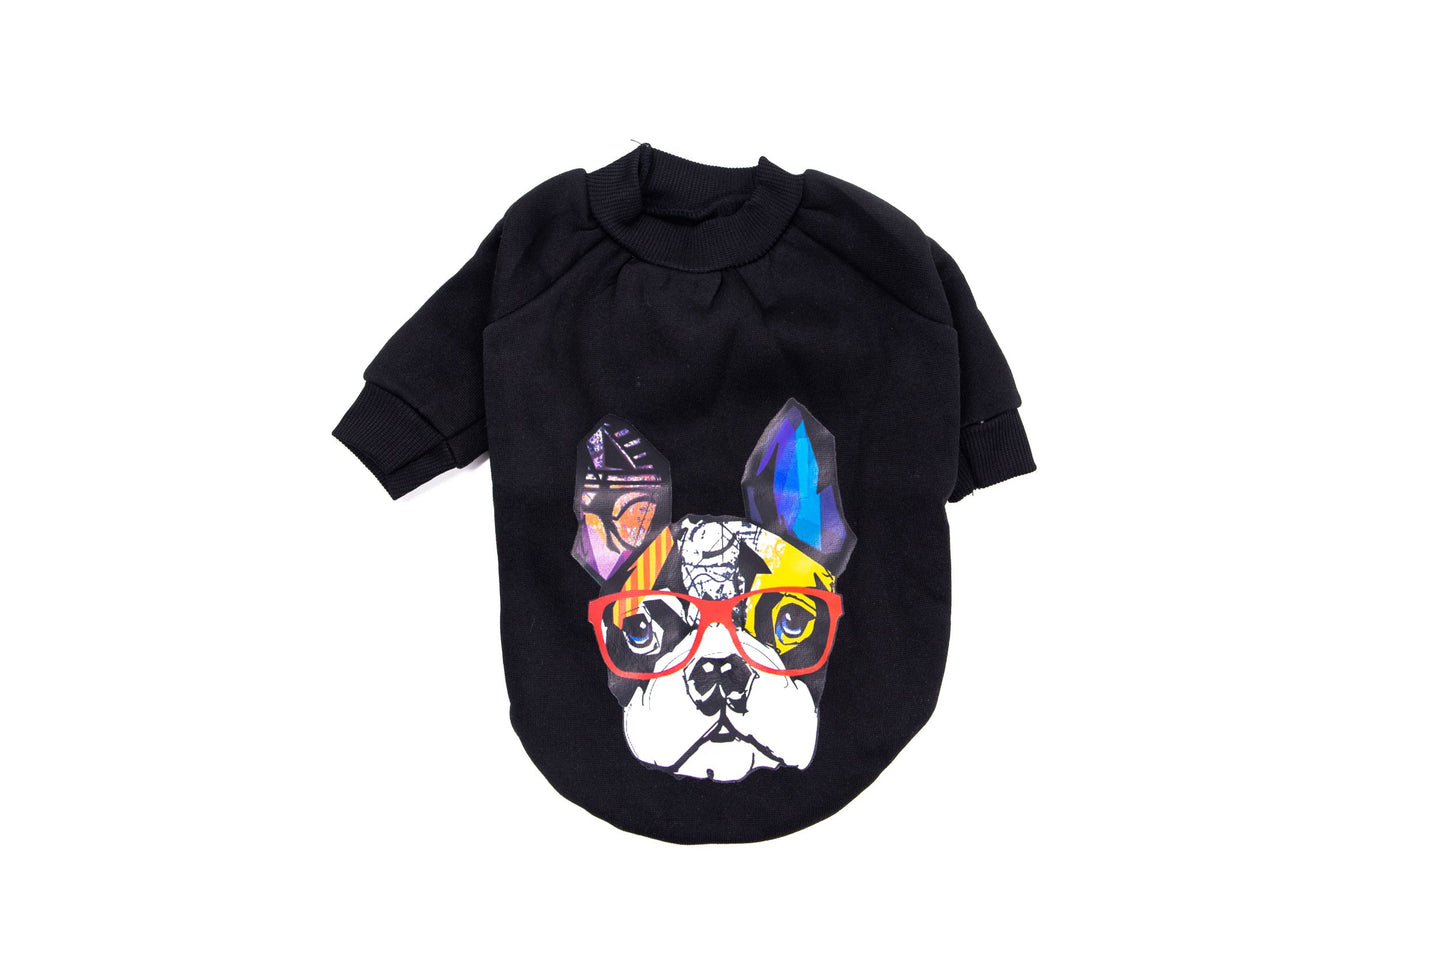 “The Bulldog” Pet Shirt